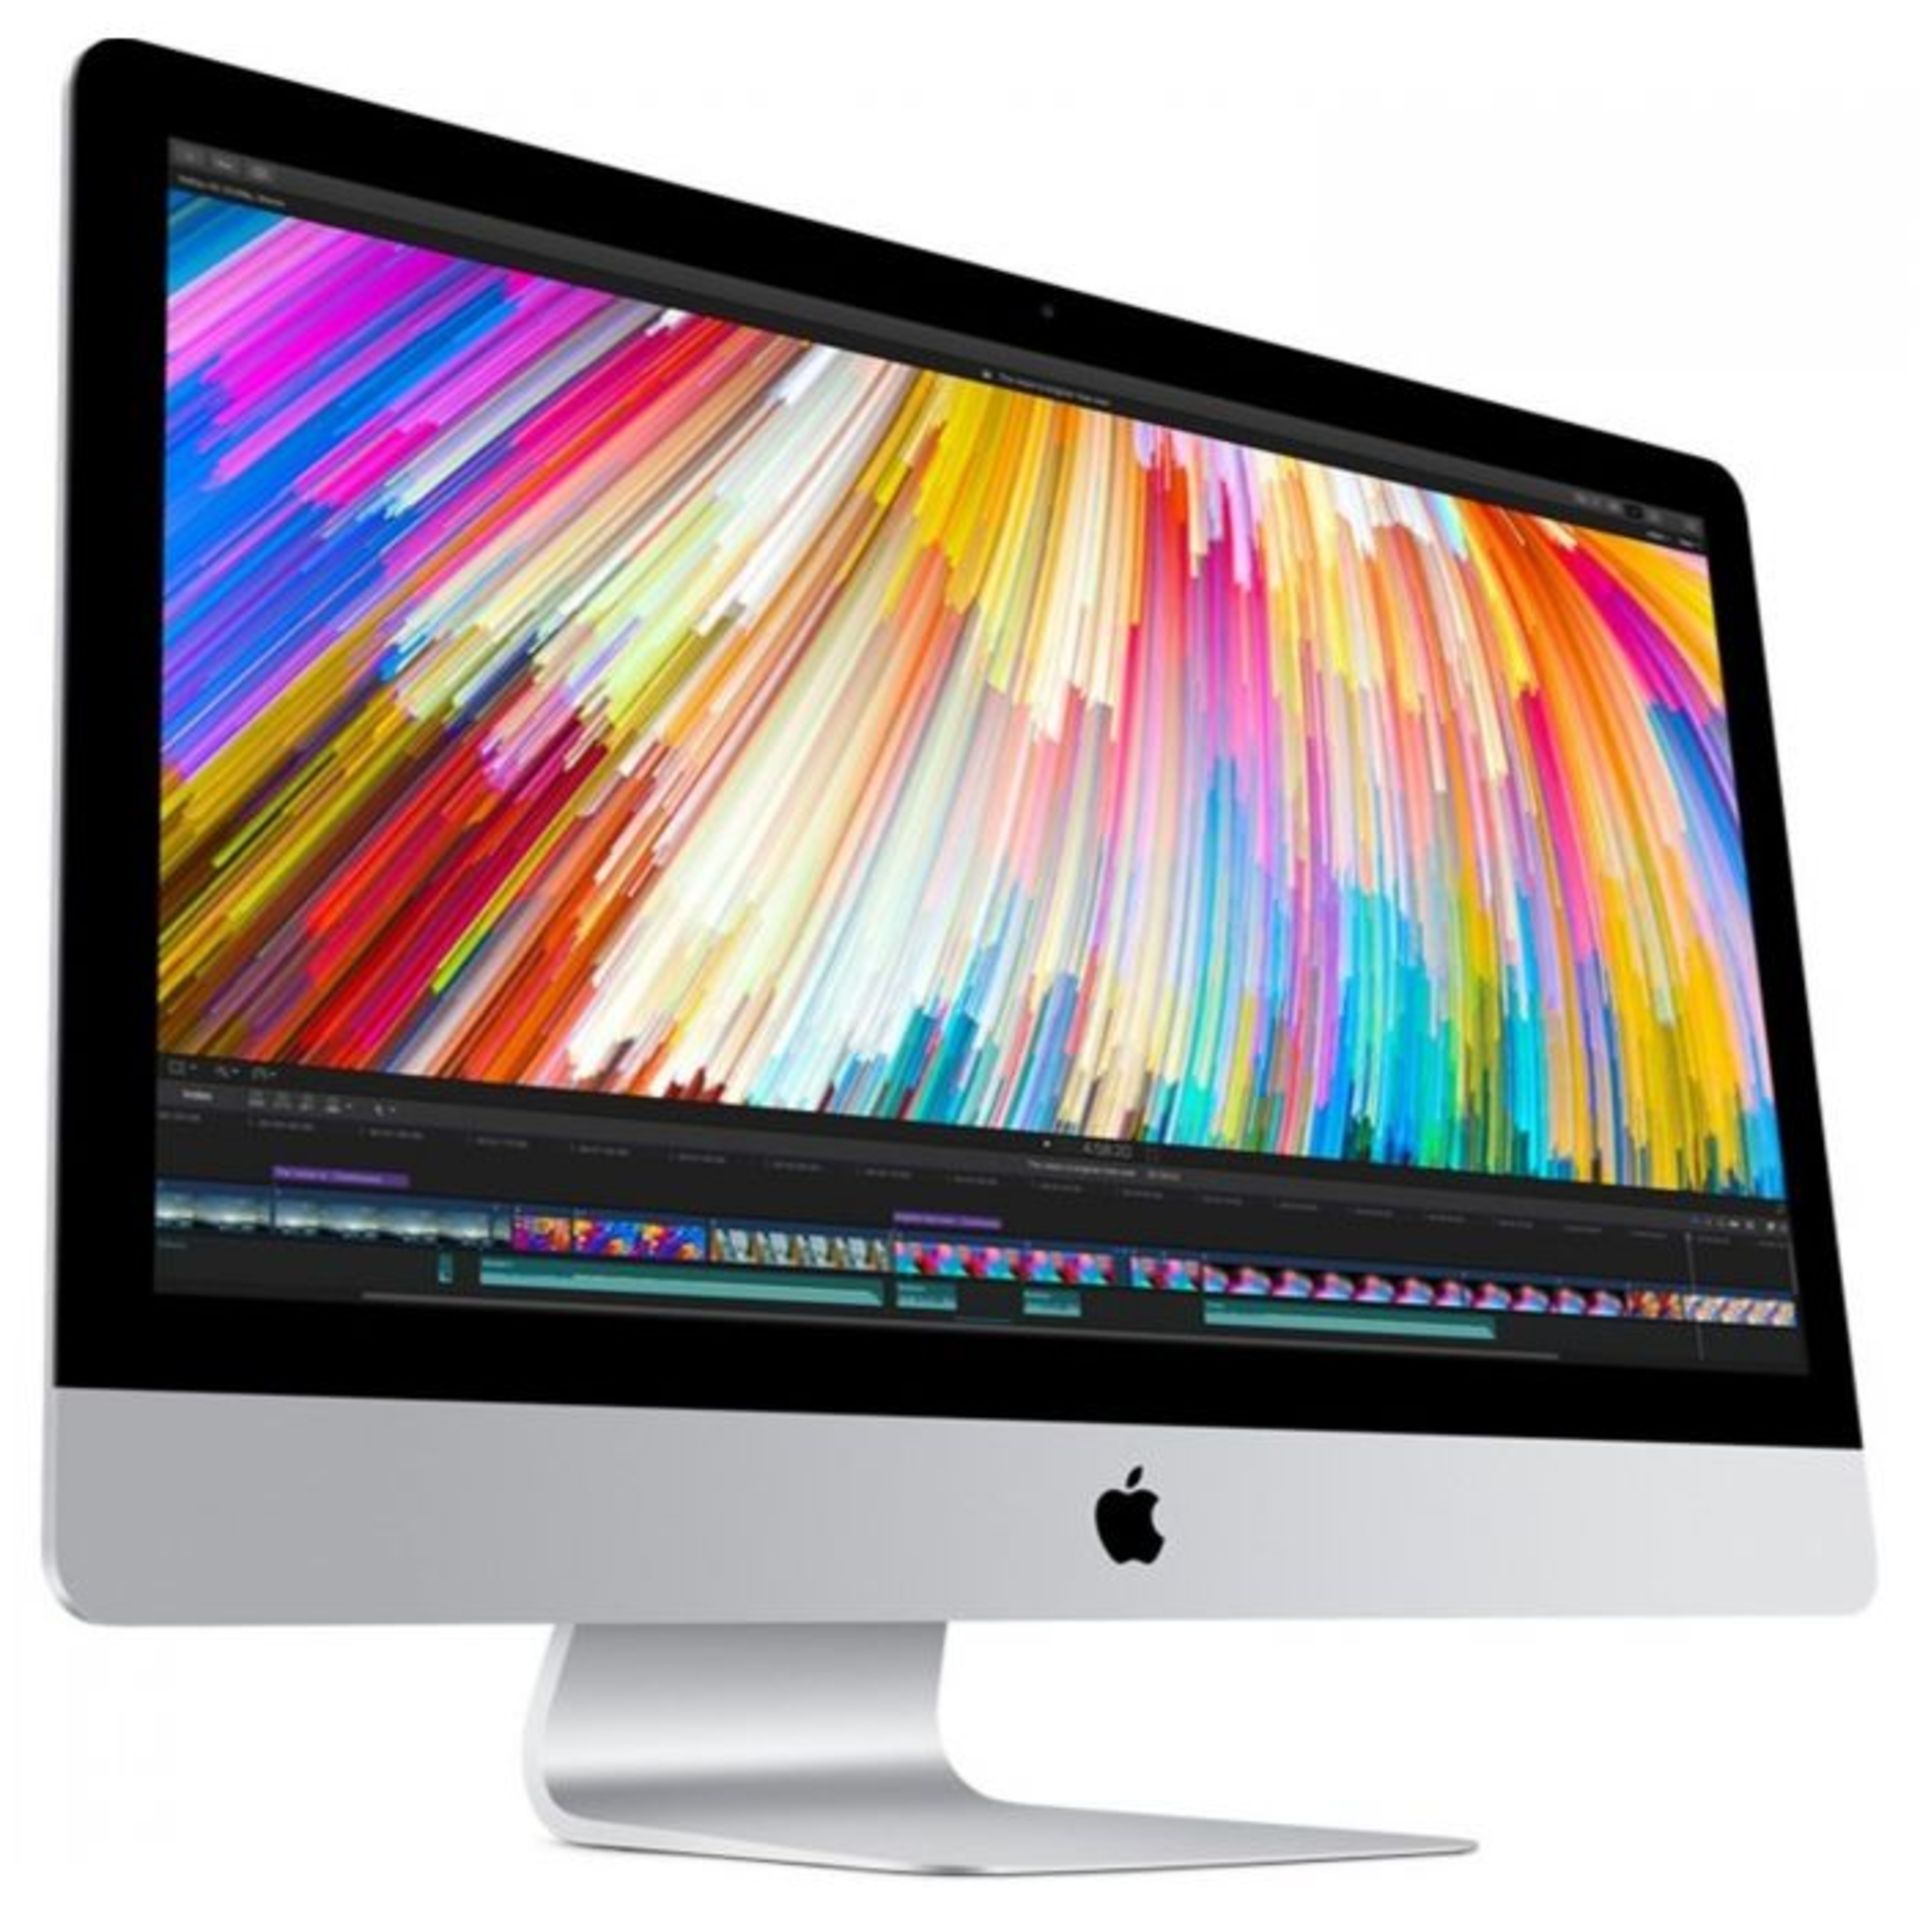 Apple iMac 27” (A1419) Slim Catalina Intel Core i7 Quad Core 16GB DDR3 1TB HD GeForce GTX Office